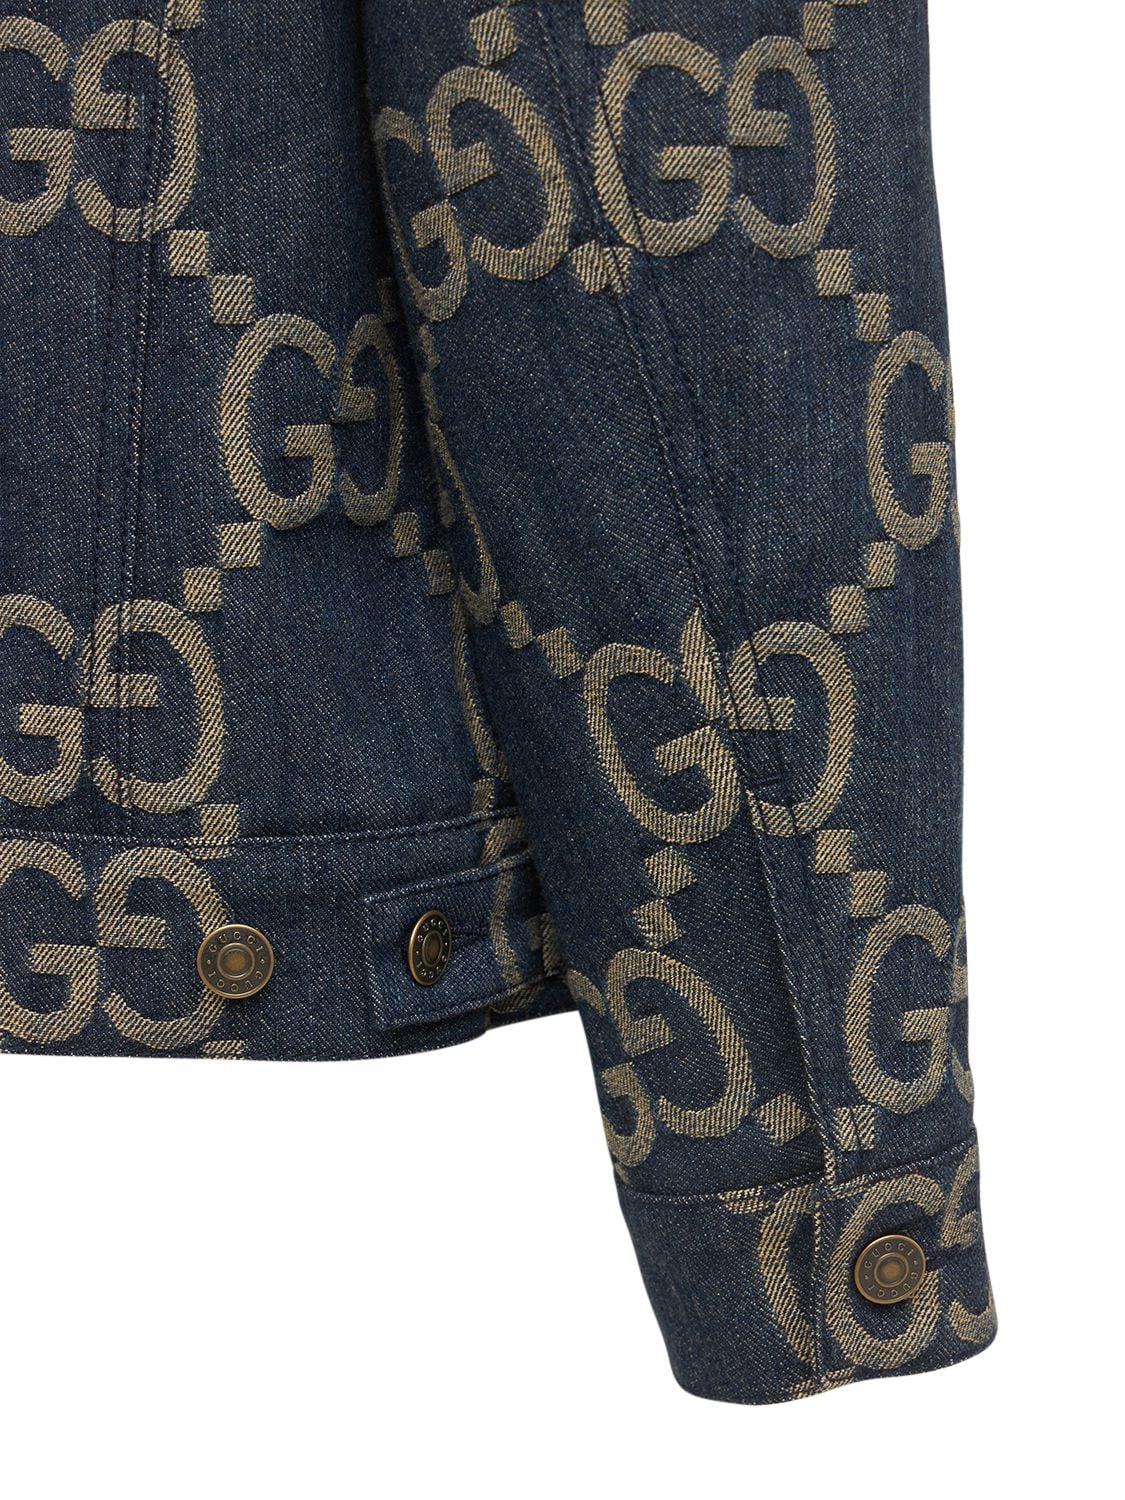 Jumbo GG denim jacket in blue and ivory